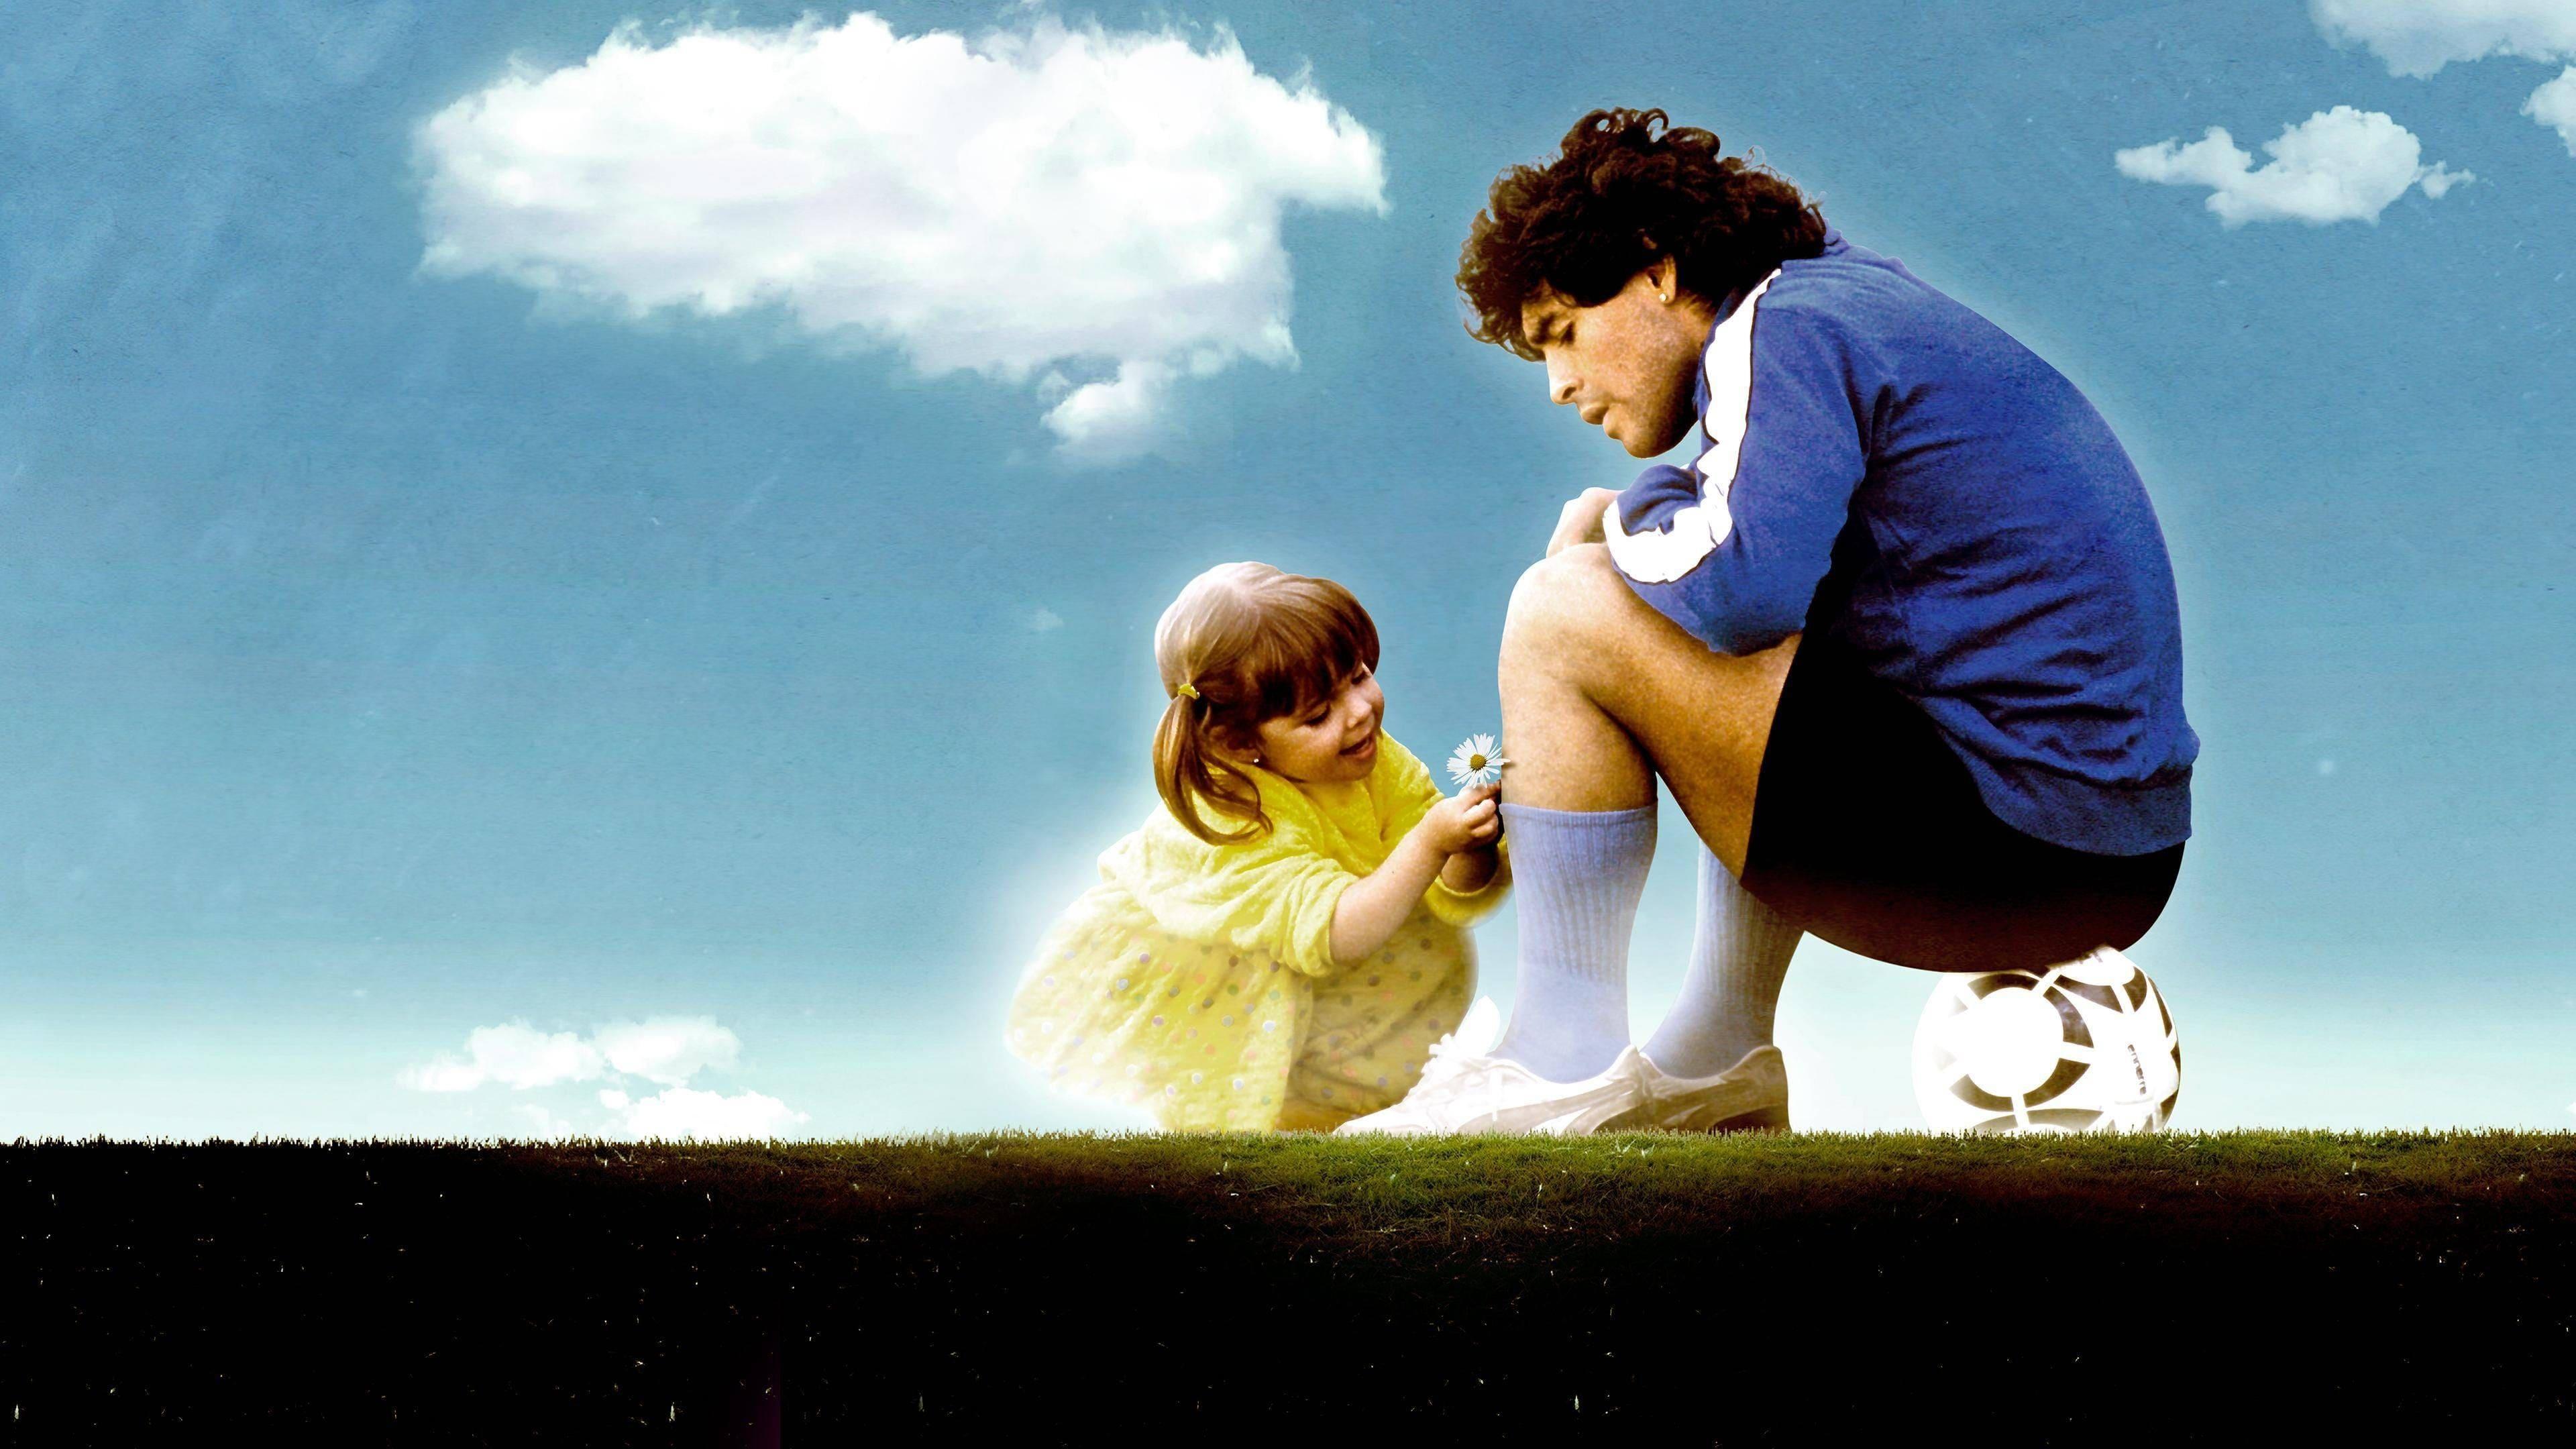 La Hija de Dios: Dalma Maradona backdrop